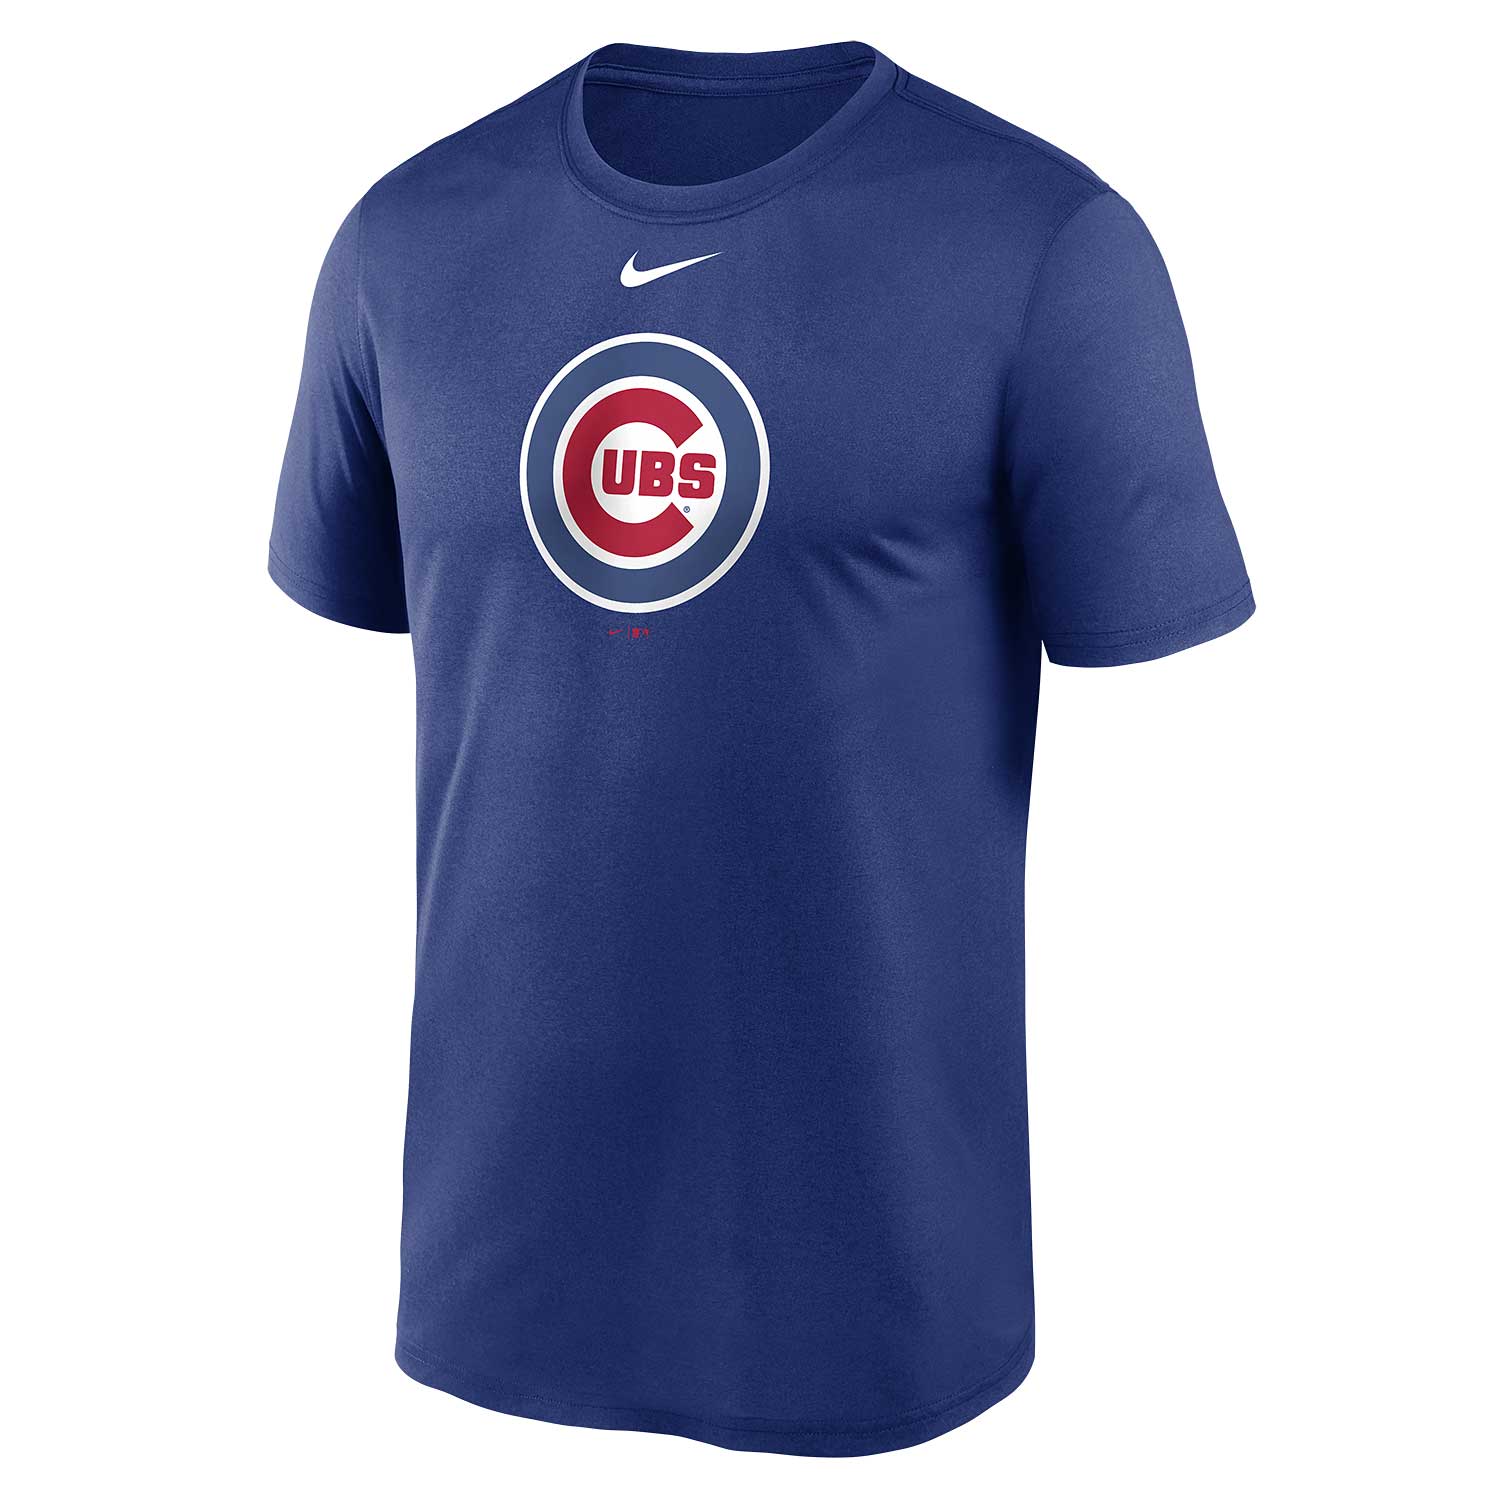 Nike Dri-FIT Local Rep Legend (MLB Chicago Cubs) Men's T-Shirt.